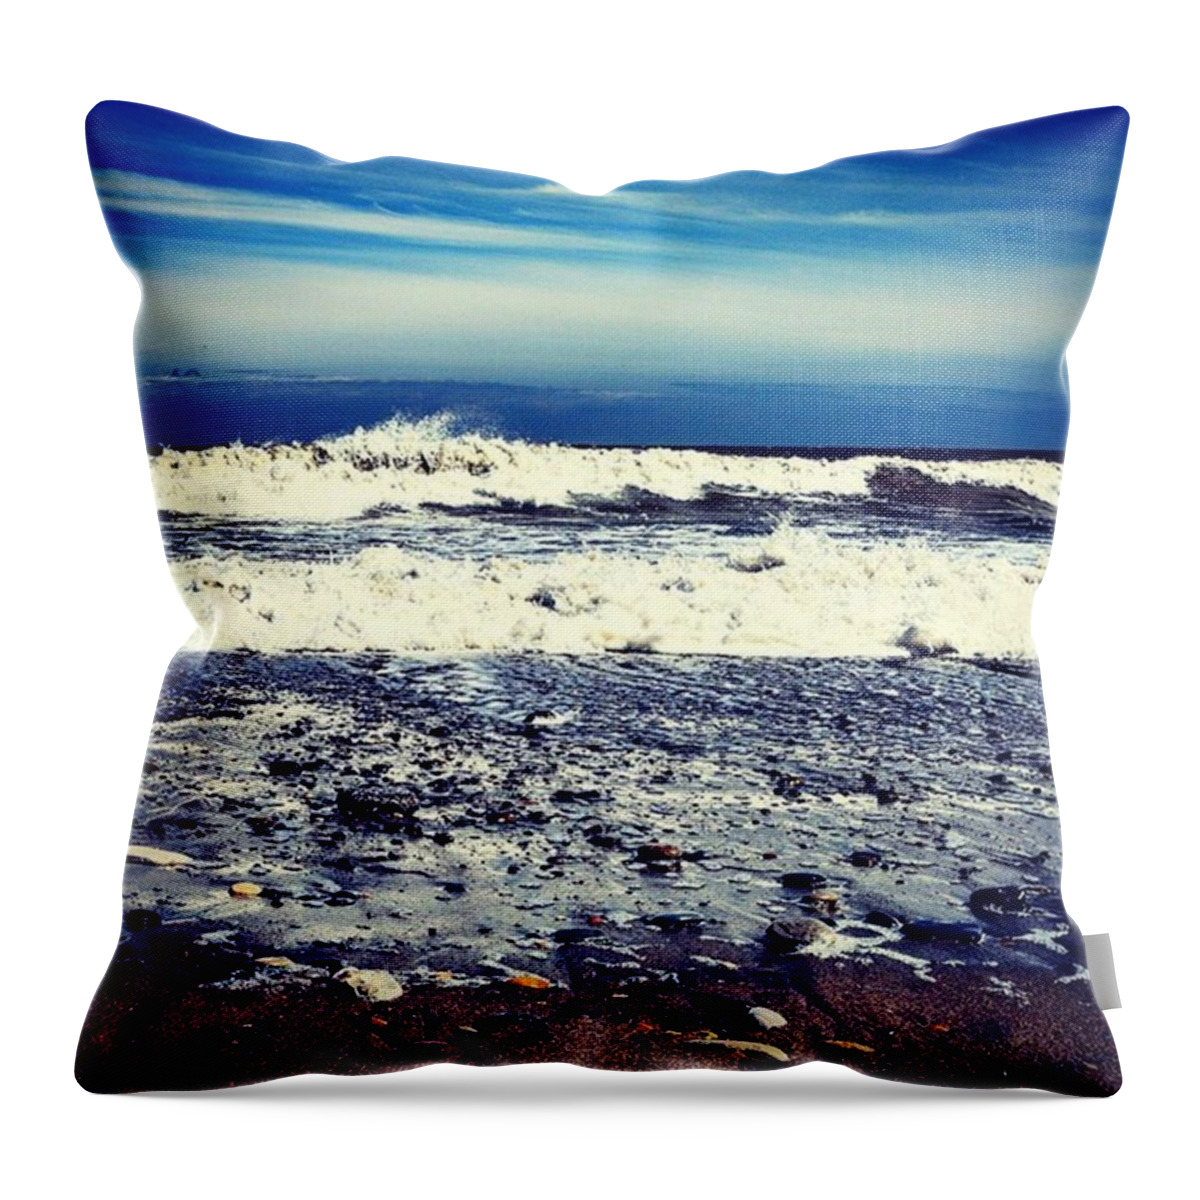 Art Throw Pillow featuring the photograph Rough Sea's Again by Richard Atkin